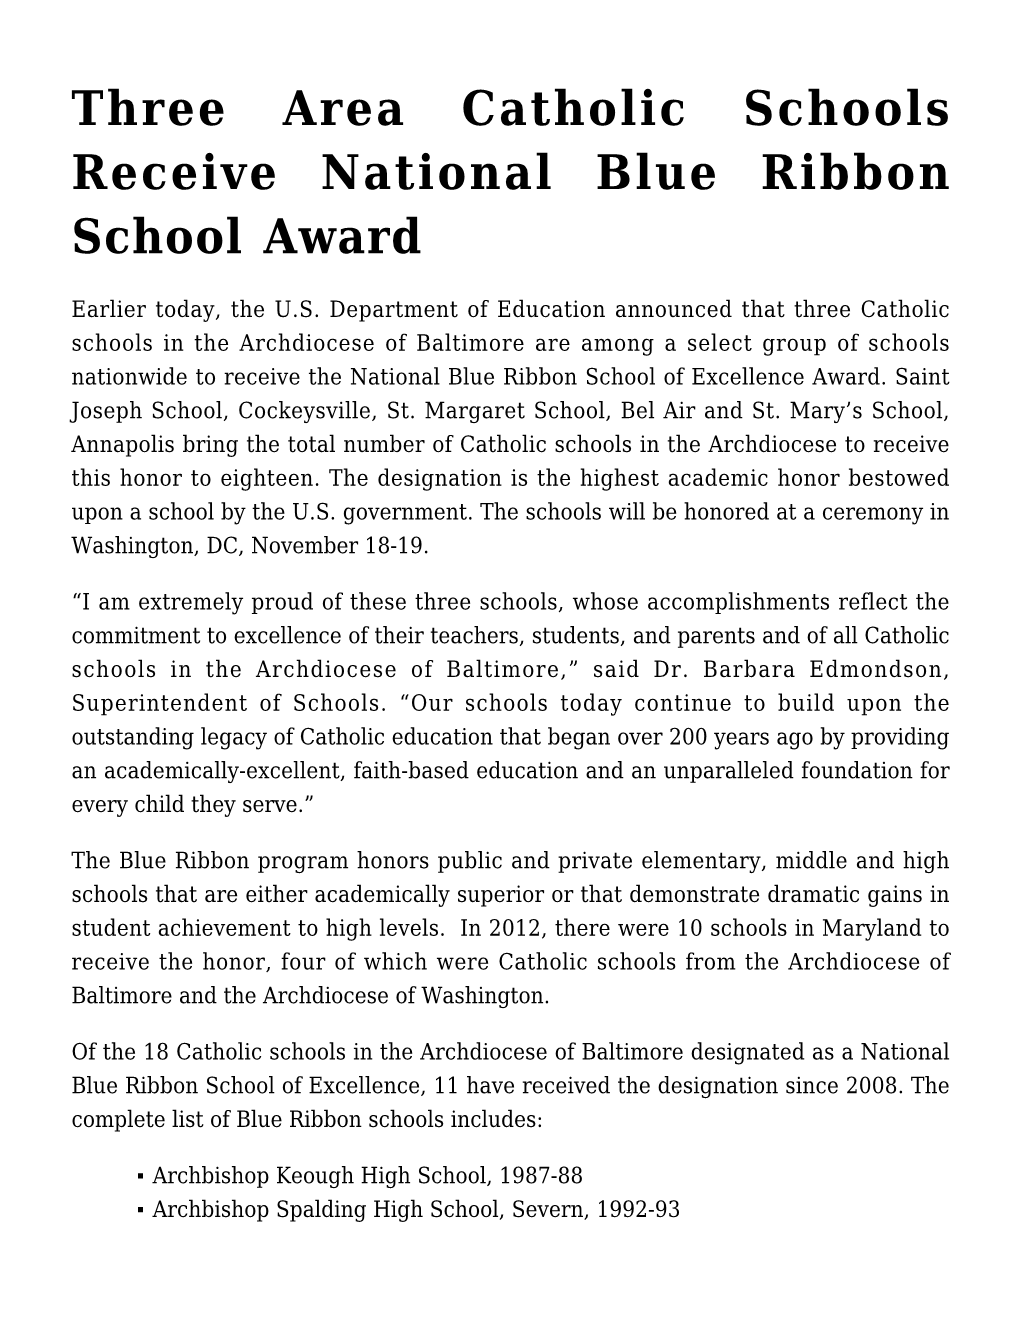 Three Area Catholic Schools Receive National Blue Ribbon School Award